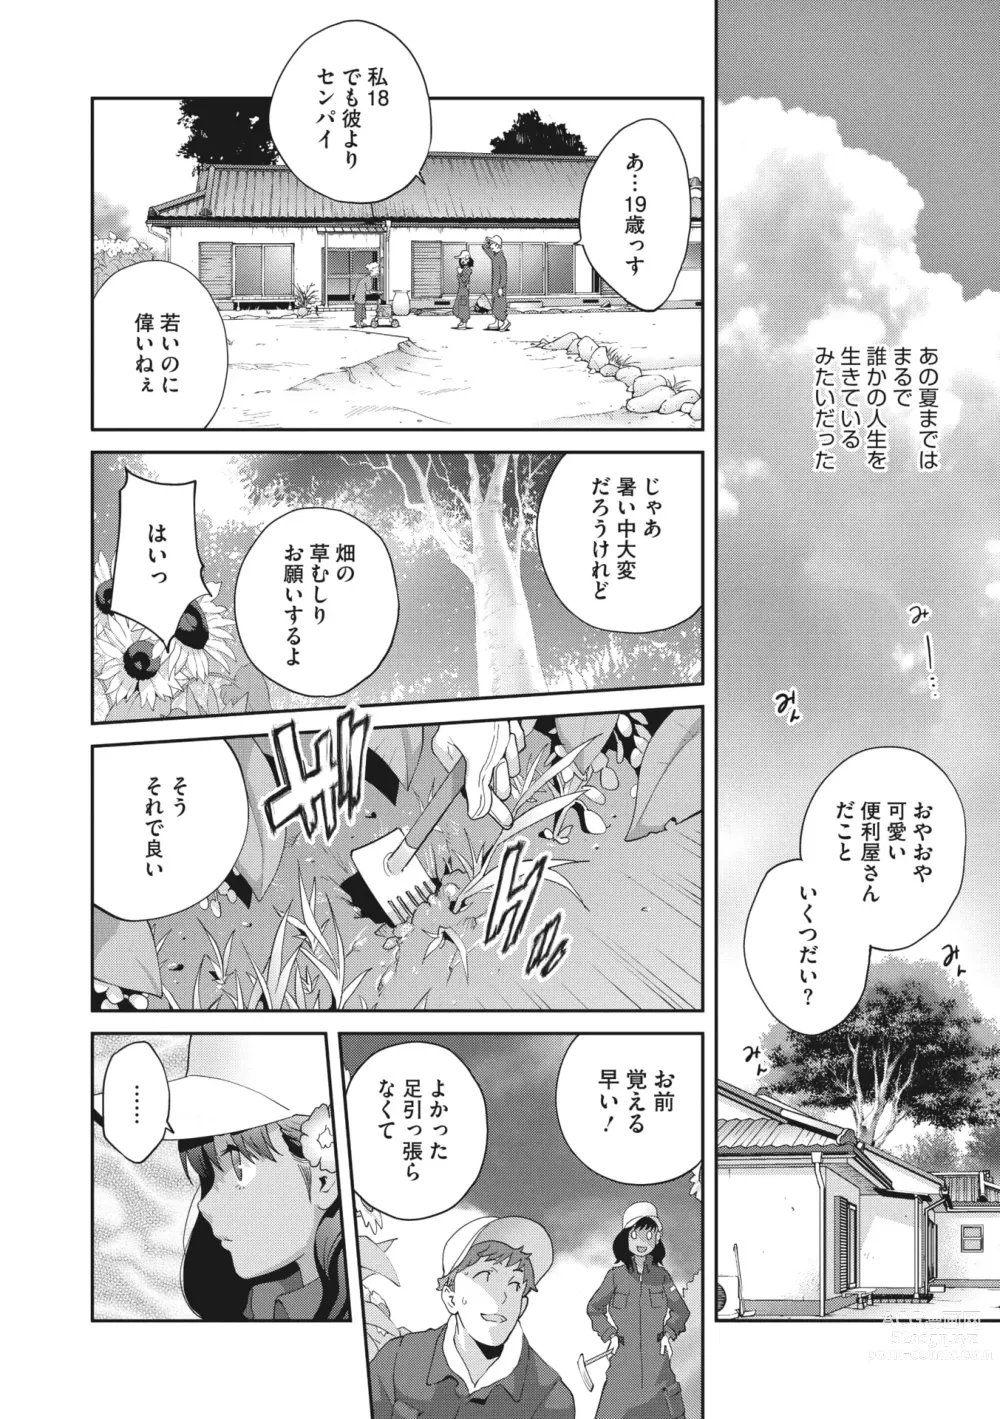 Page 6 of manga Kimama Tawawa Manana 1-4